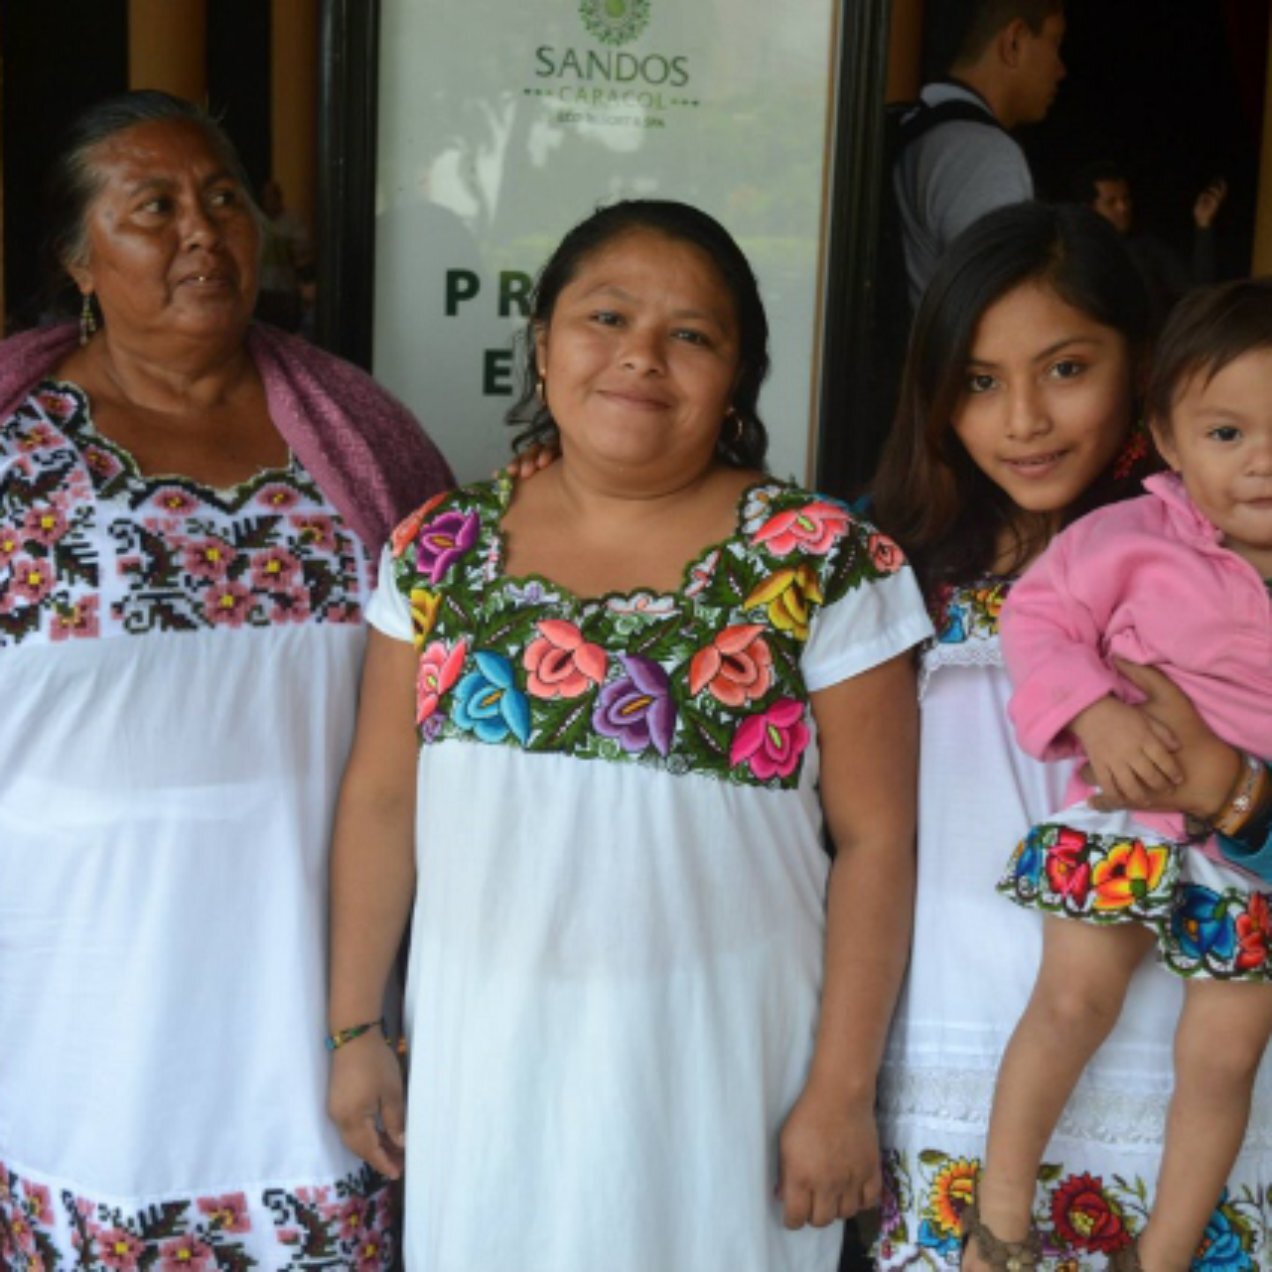 Sandos Continues Supporting Mayan Community